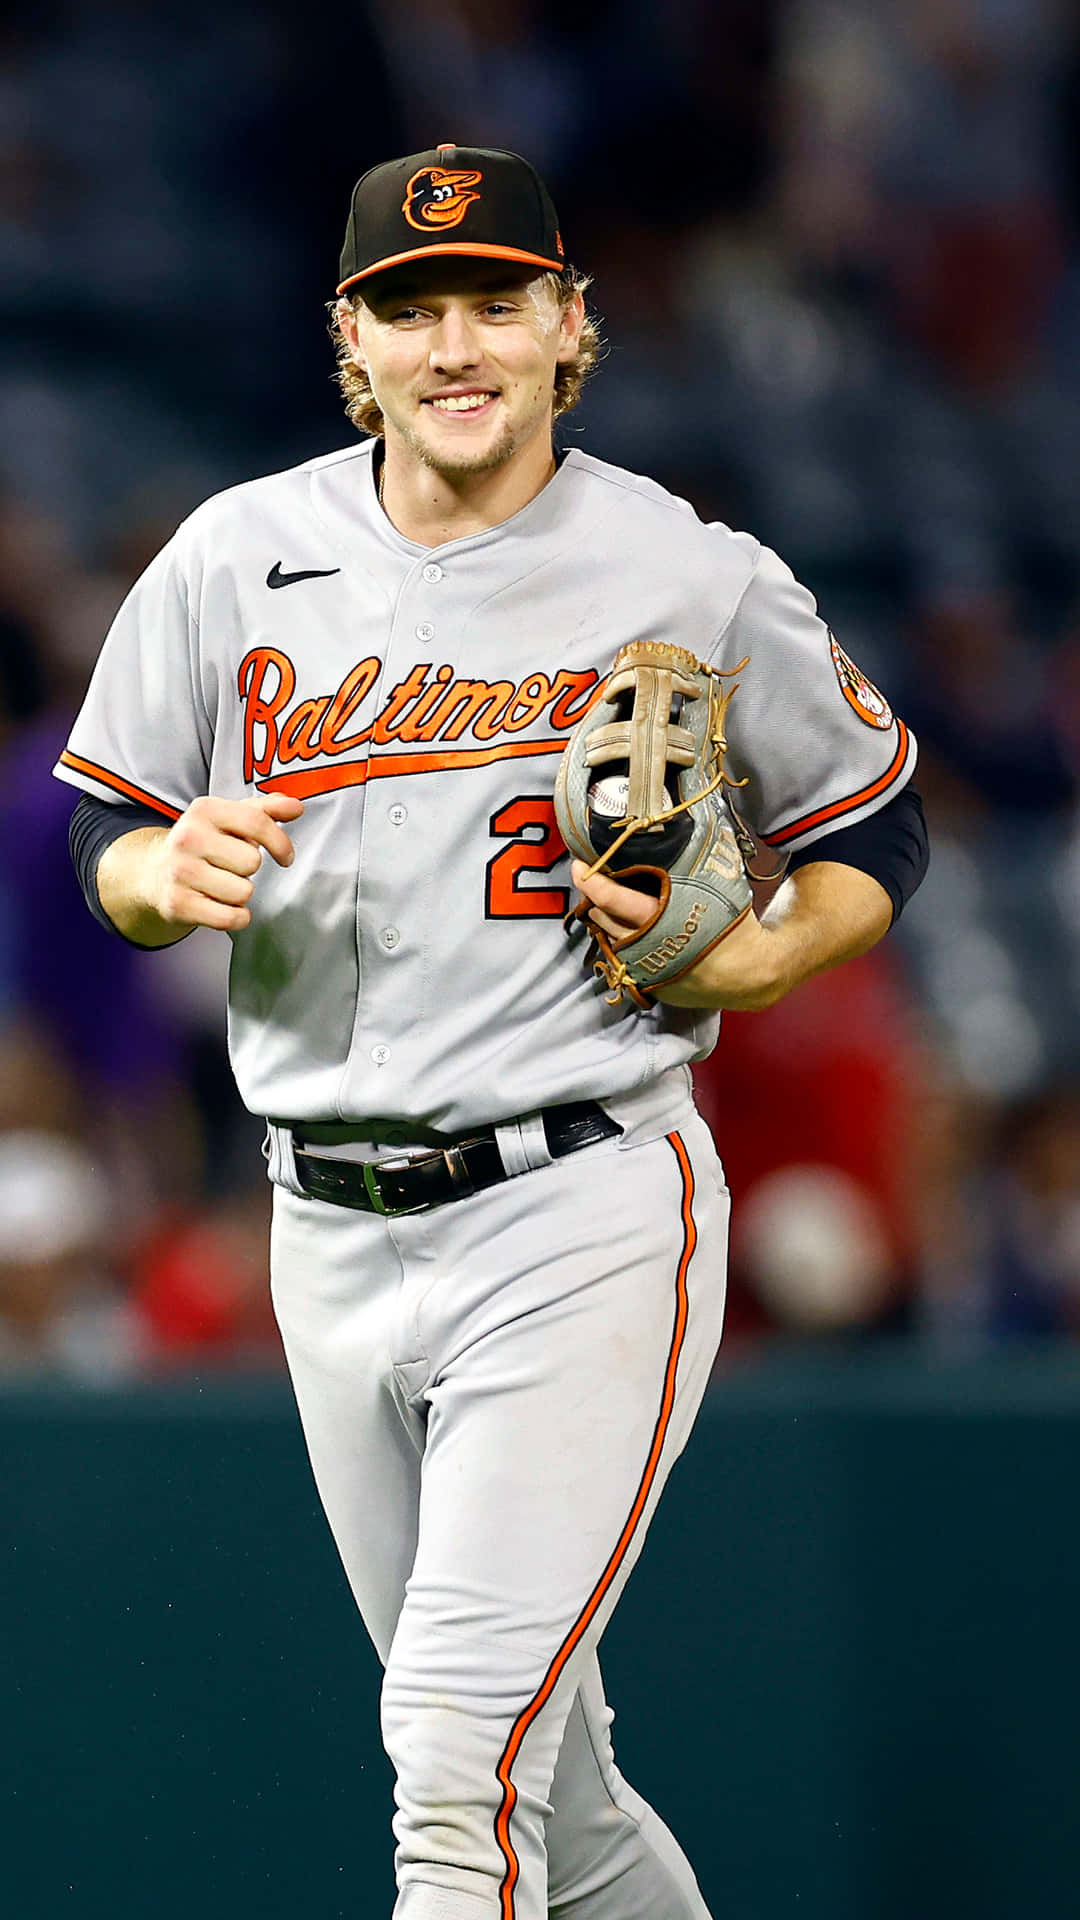 Baltimore Orioles Player Smiling On Field.jpg Wallpaper